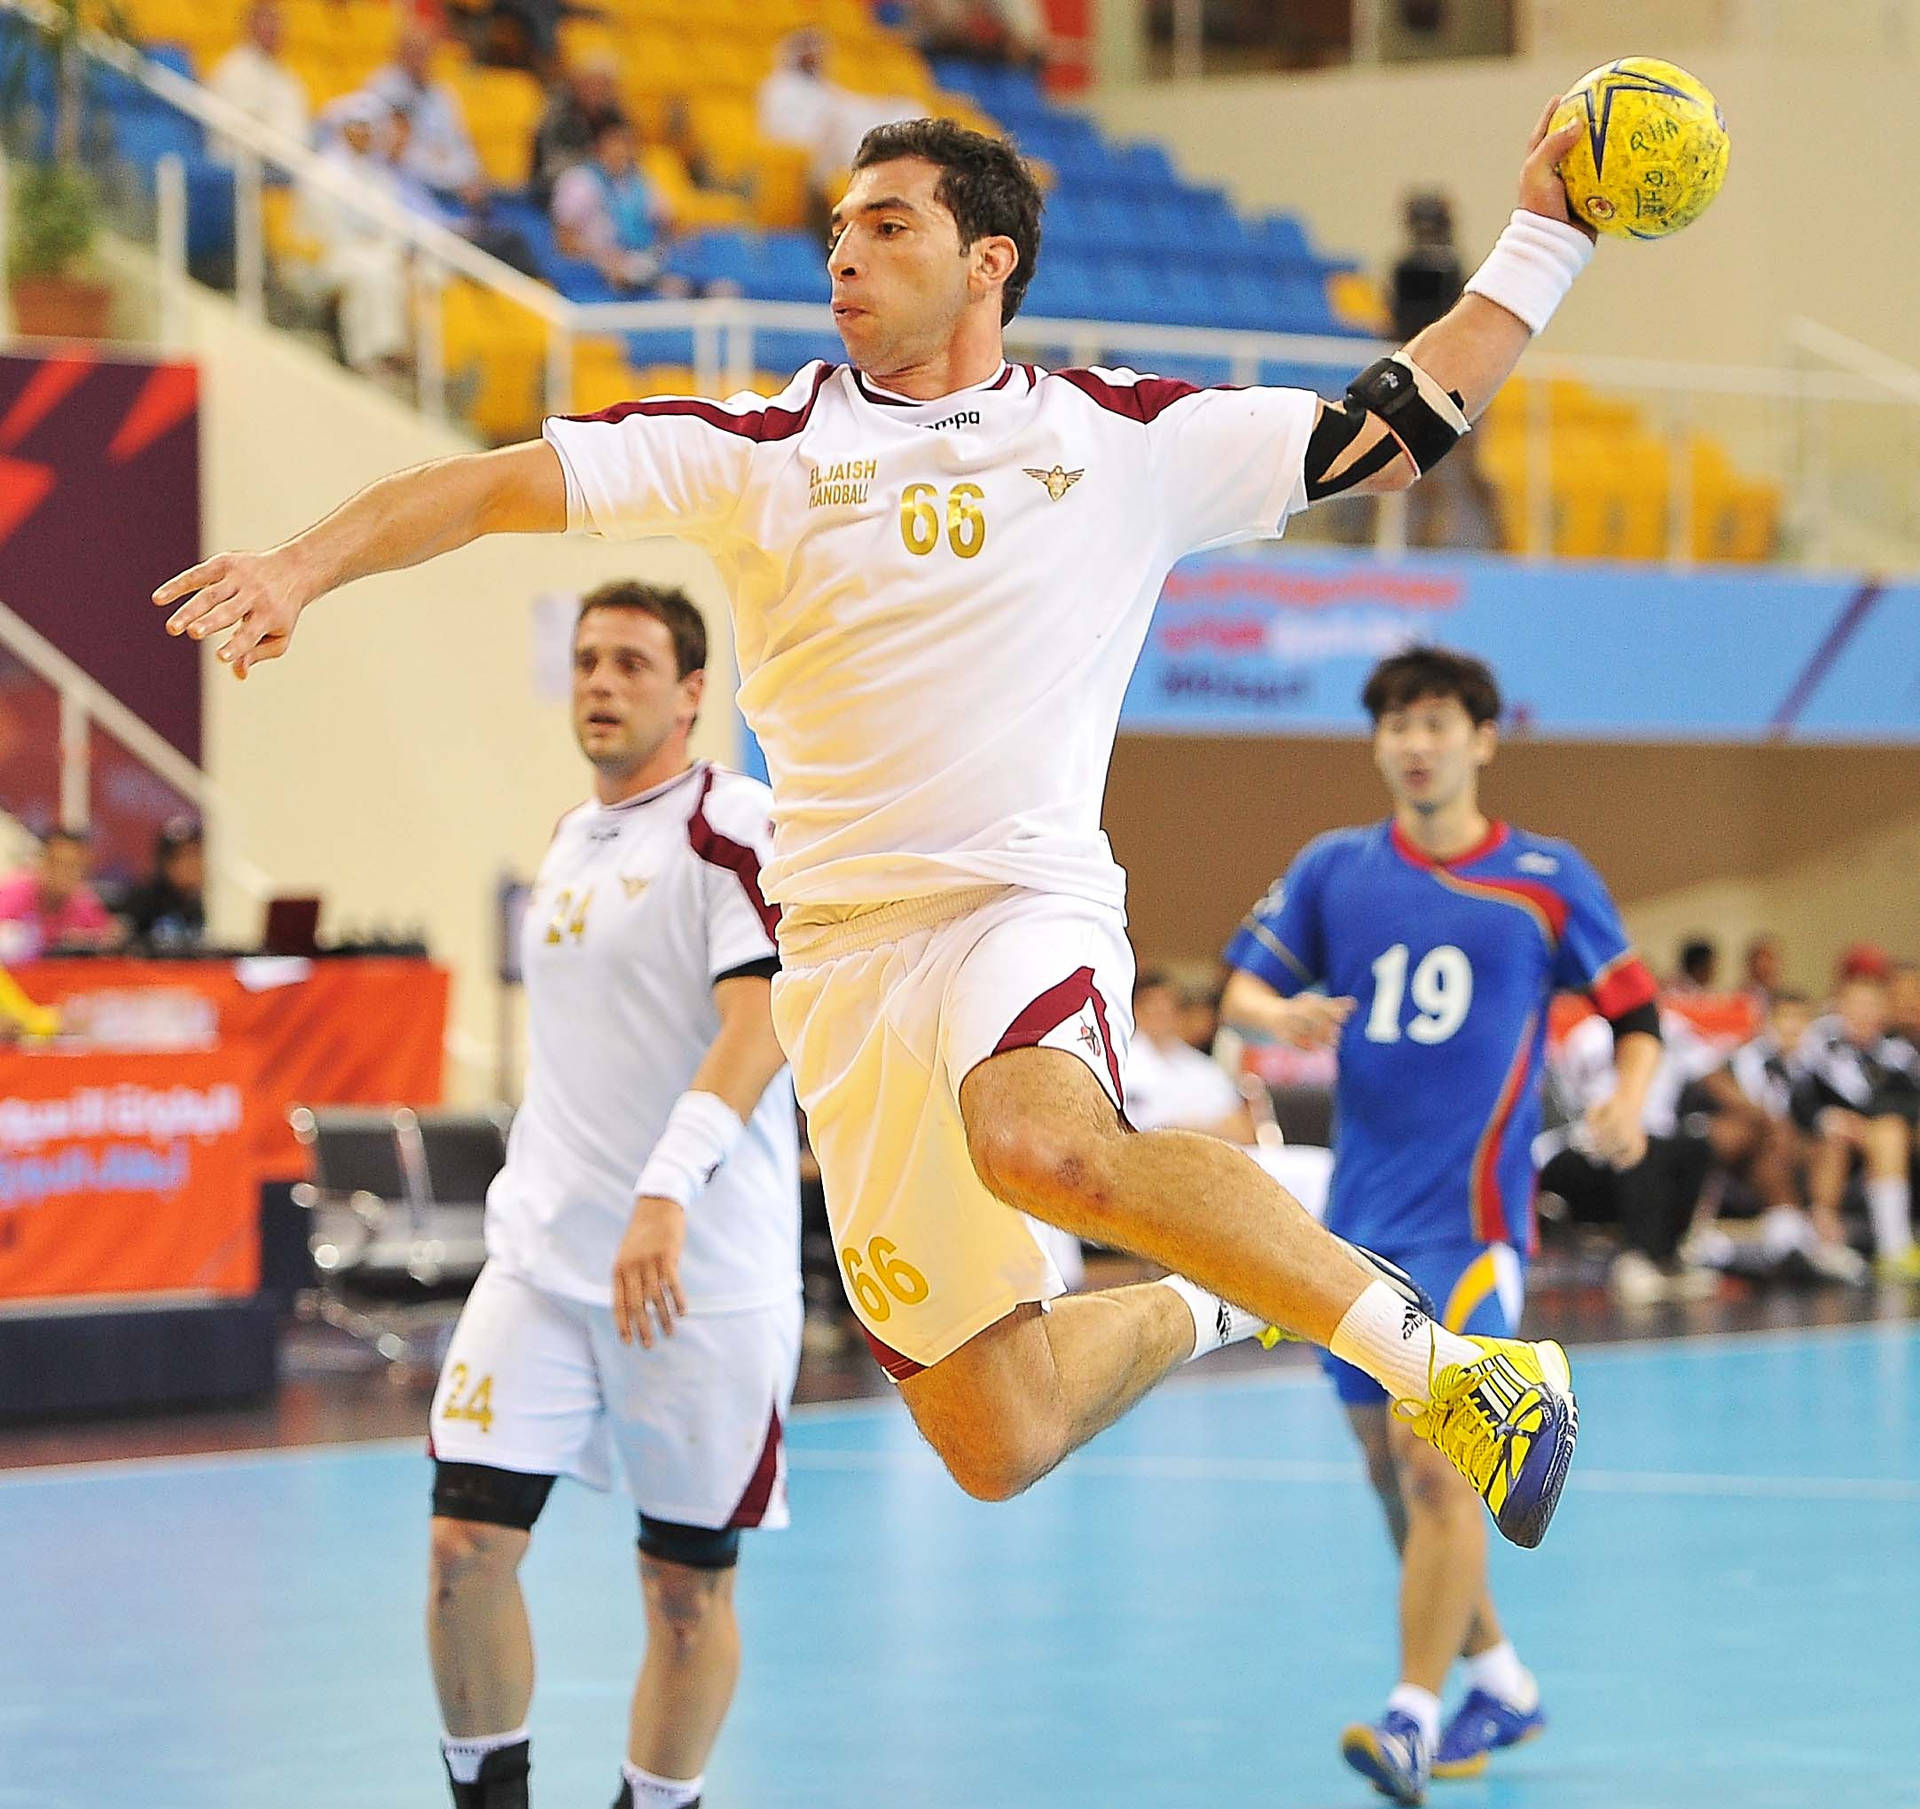 Handball Player Number 66